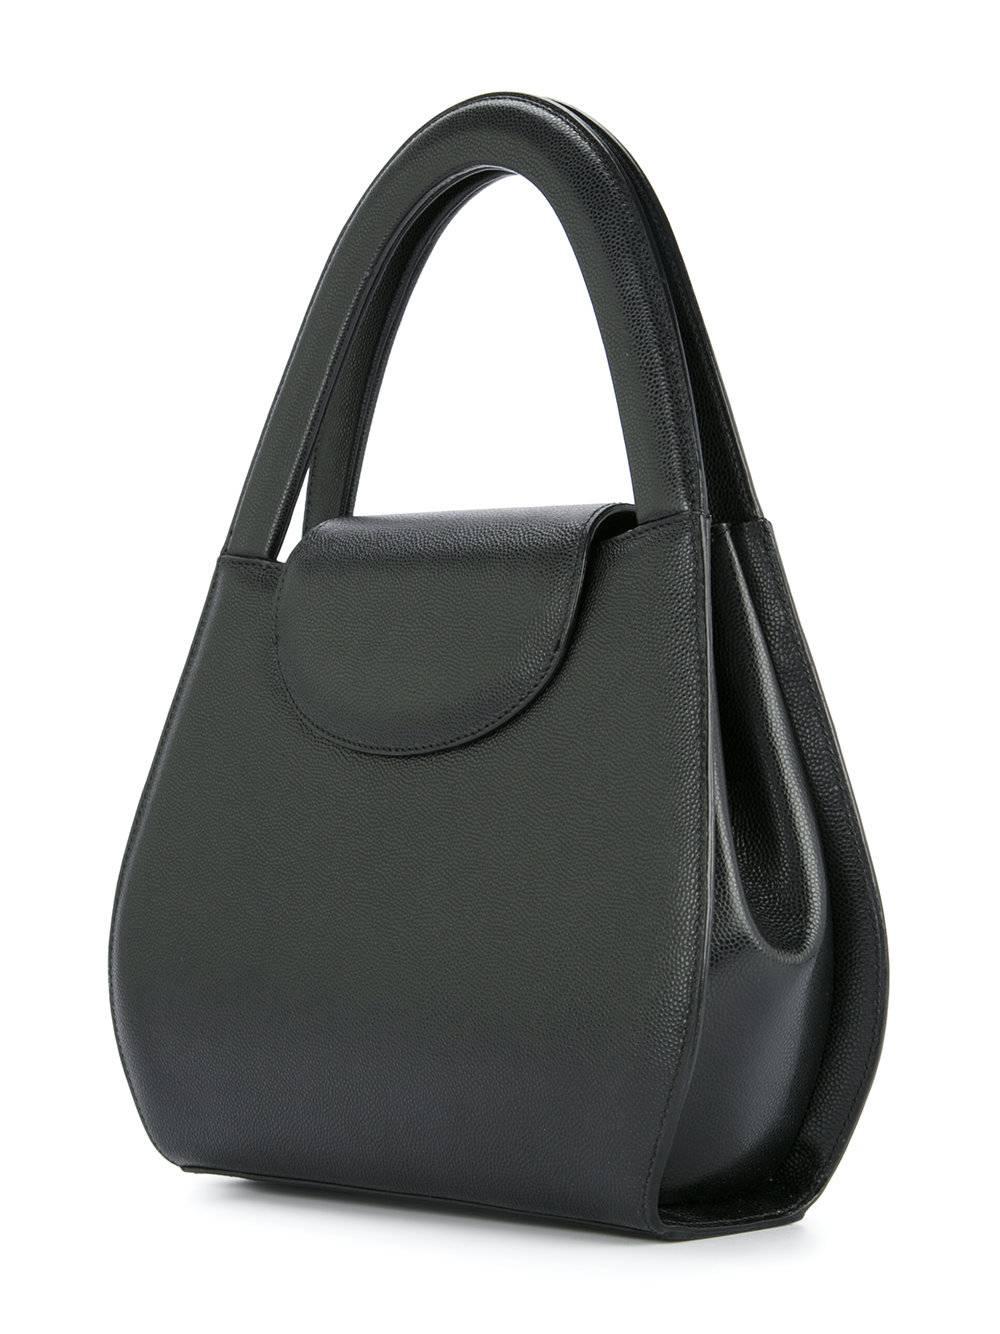 Women's Cartier Black Leather Gold Emblem Top Handle Kelly Style Satchel Evening Bag